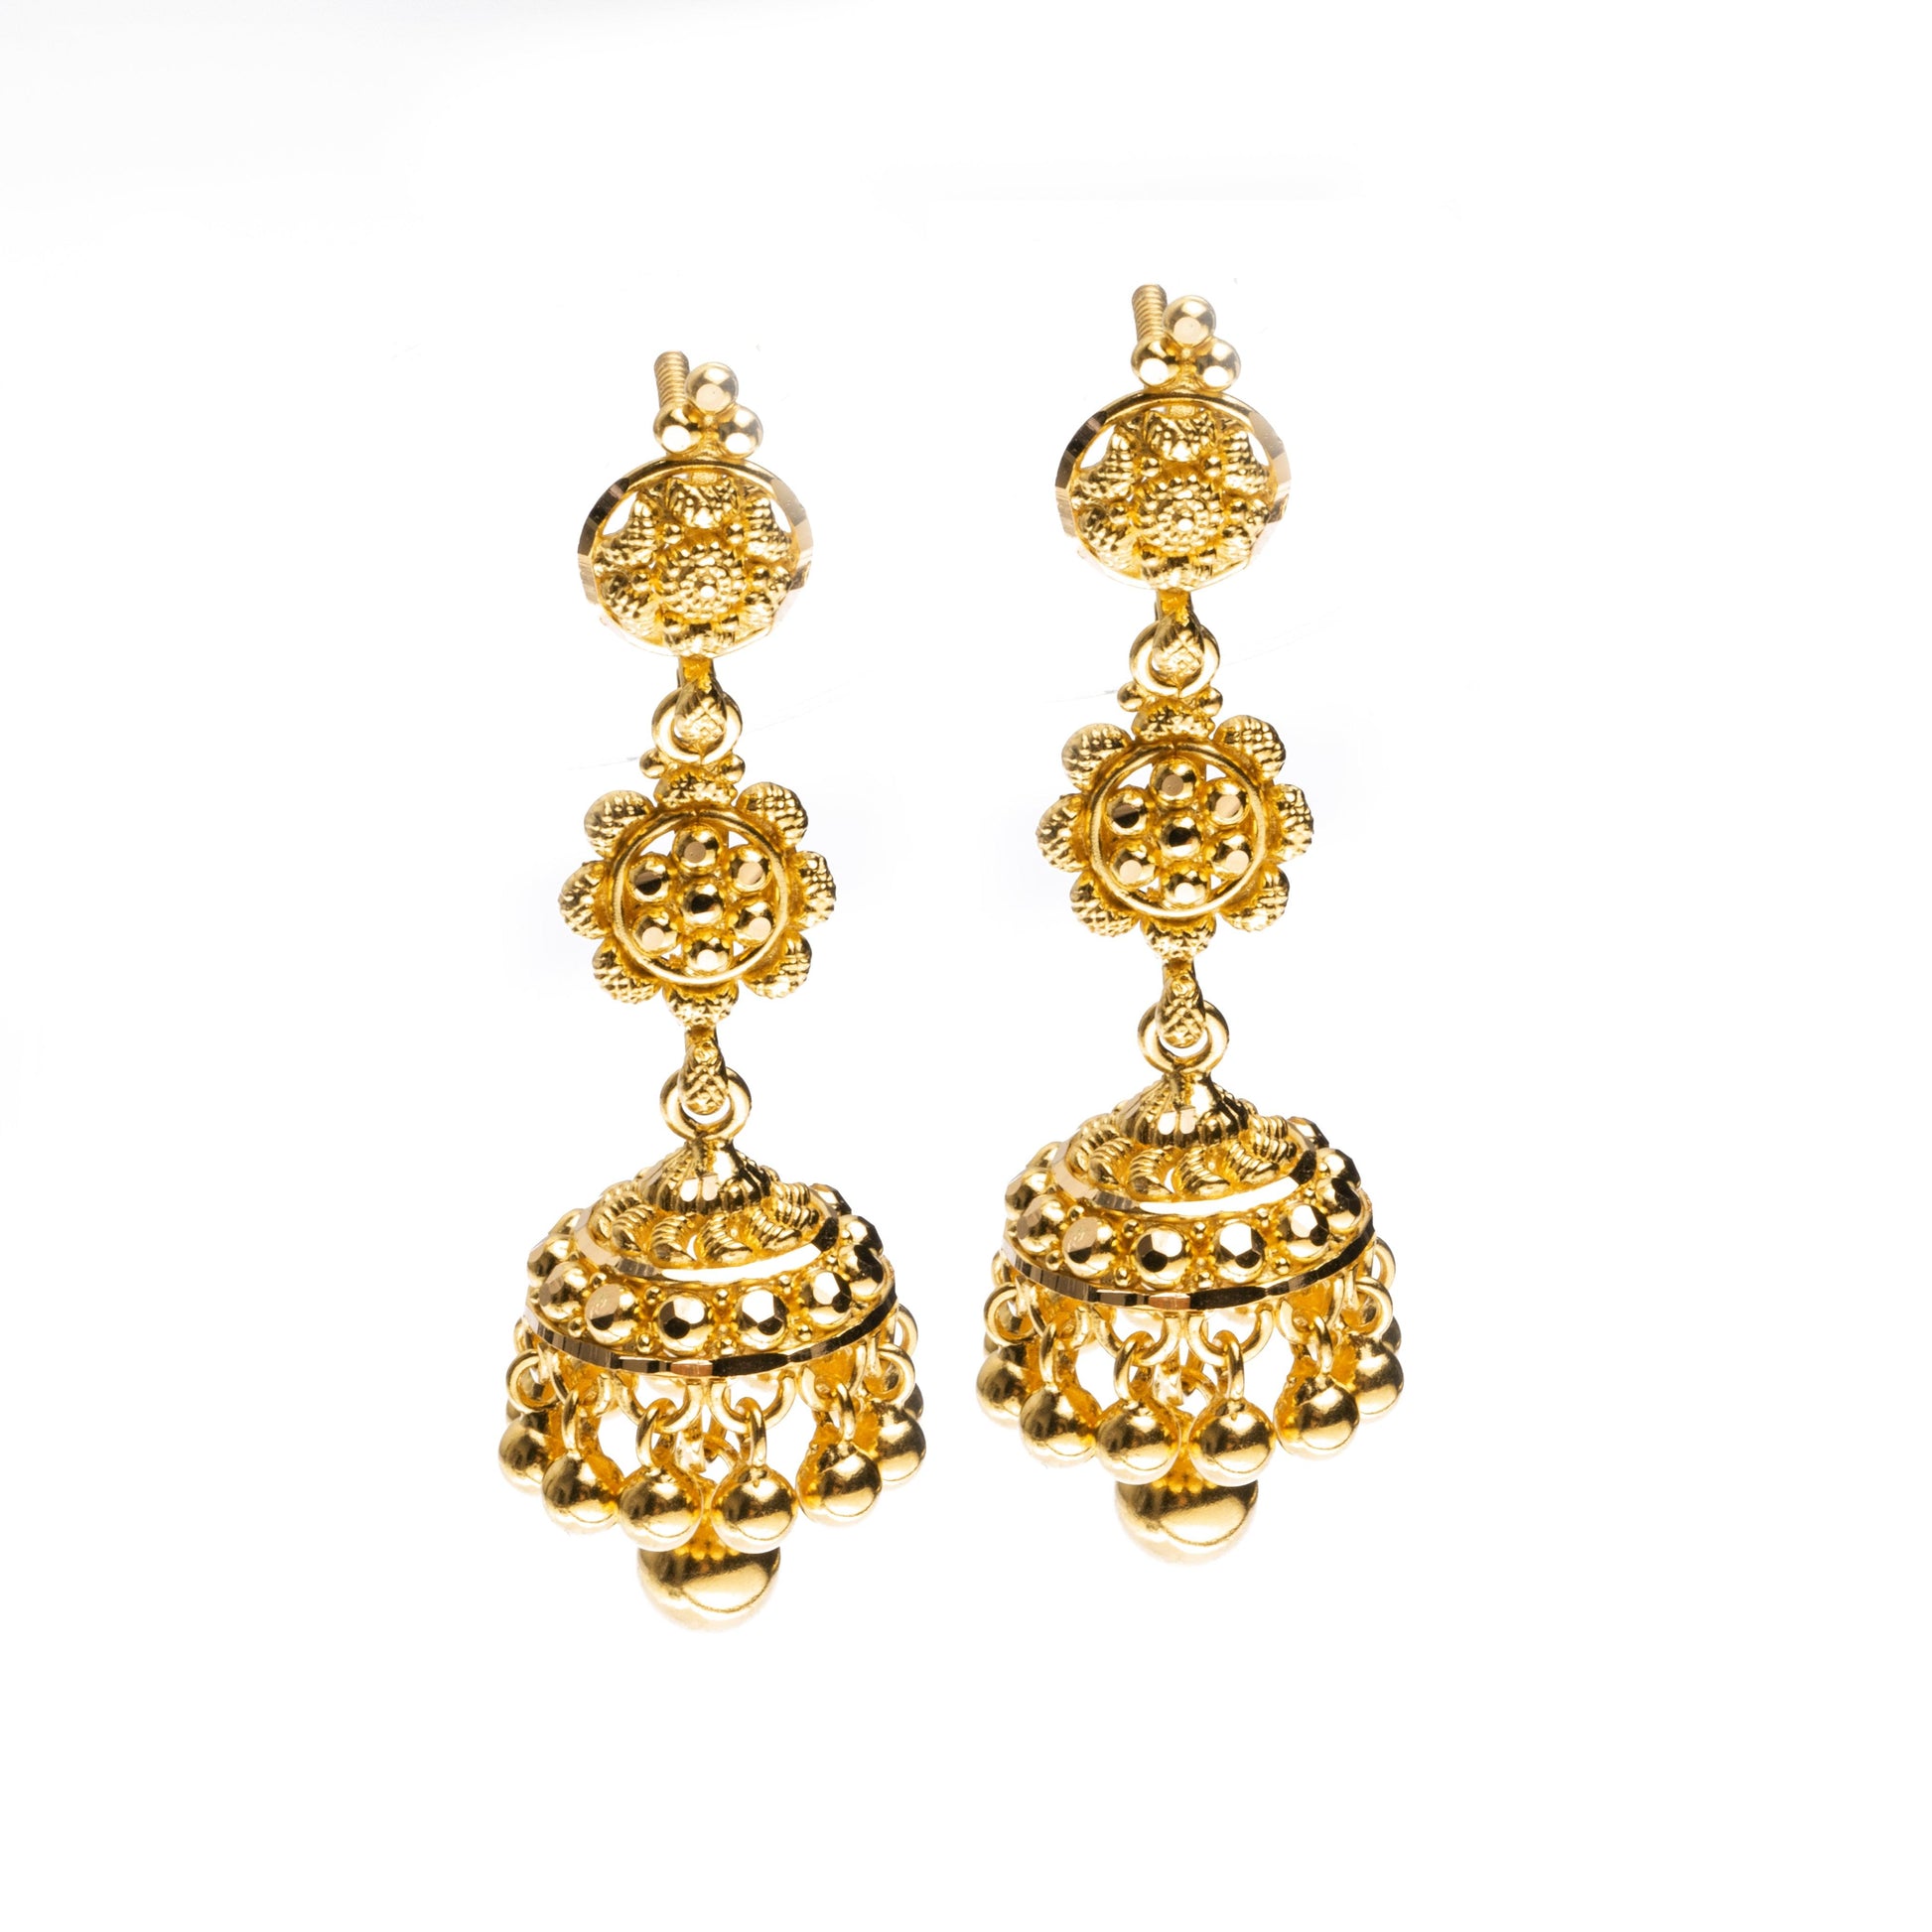 22ct Gold Diamond Cut Design Drop 'Jhoomka' Earrings with Gold Bead Drops (12.3g) E-8411 - Minar Jewellers